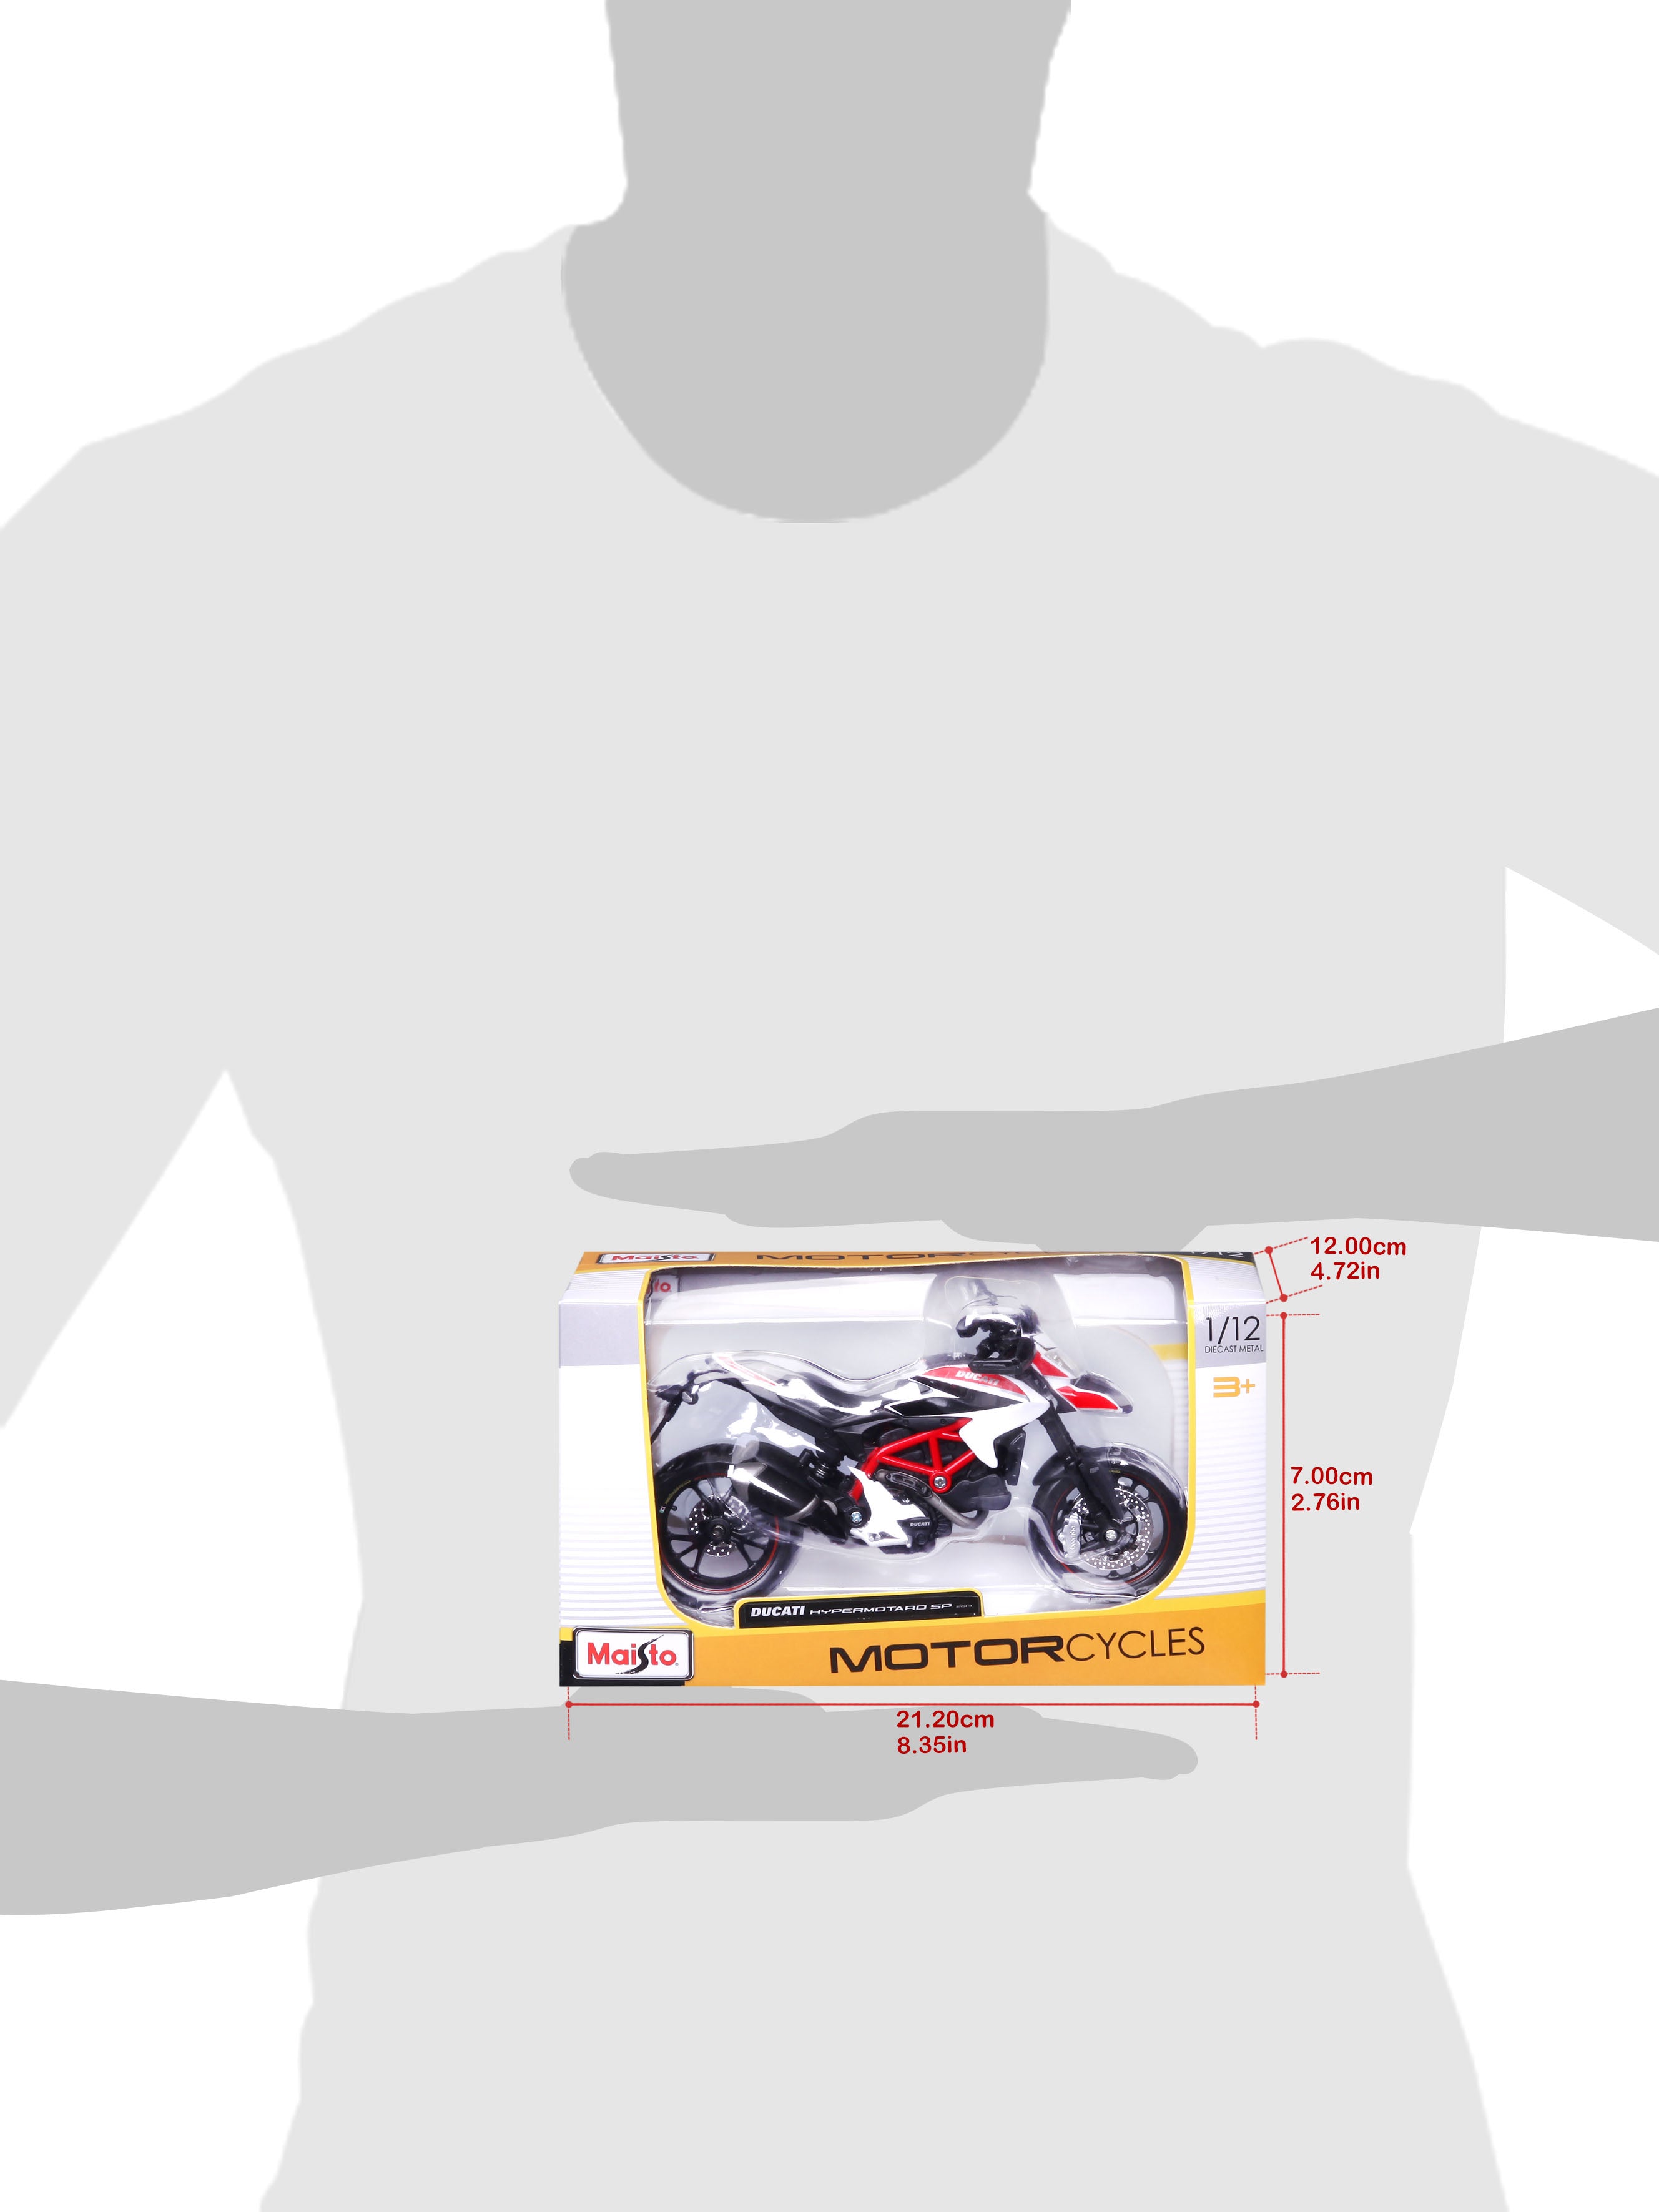 10-13015 - Bburago Maisto - 1:12  Moto - Ducati Hypermotard SP 13015 - Bianca